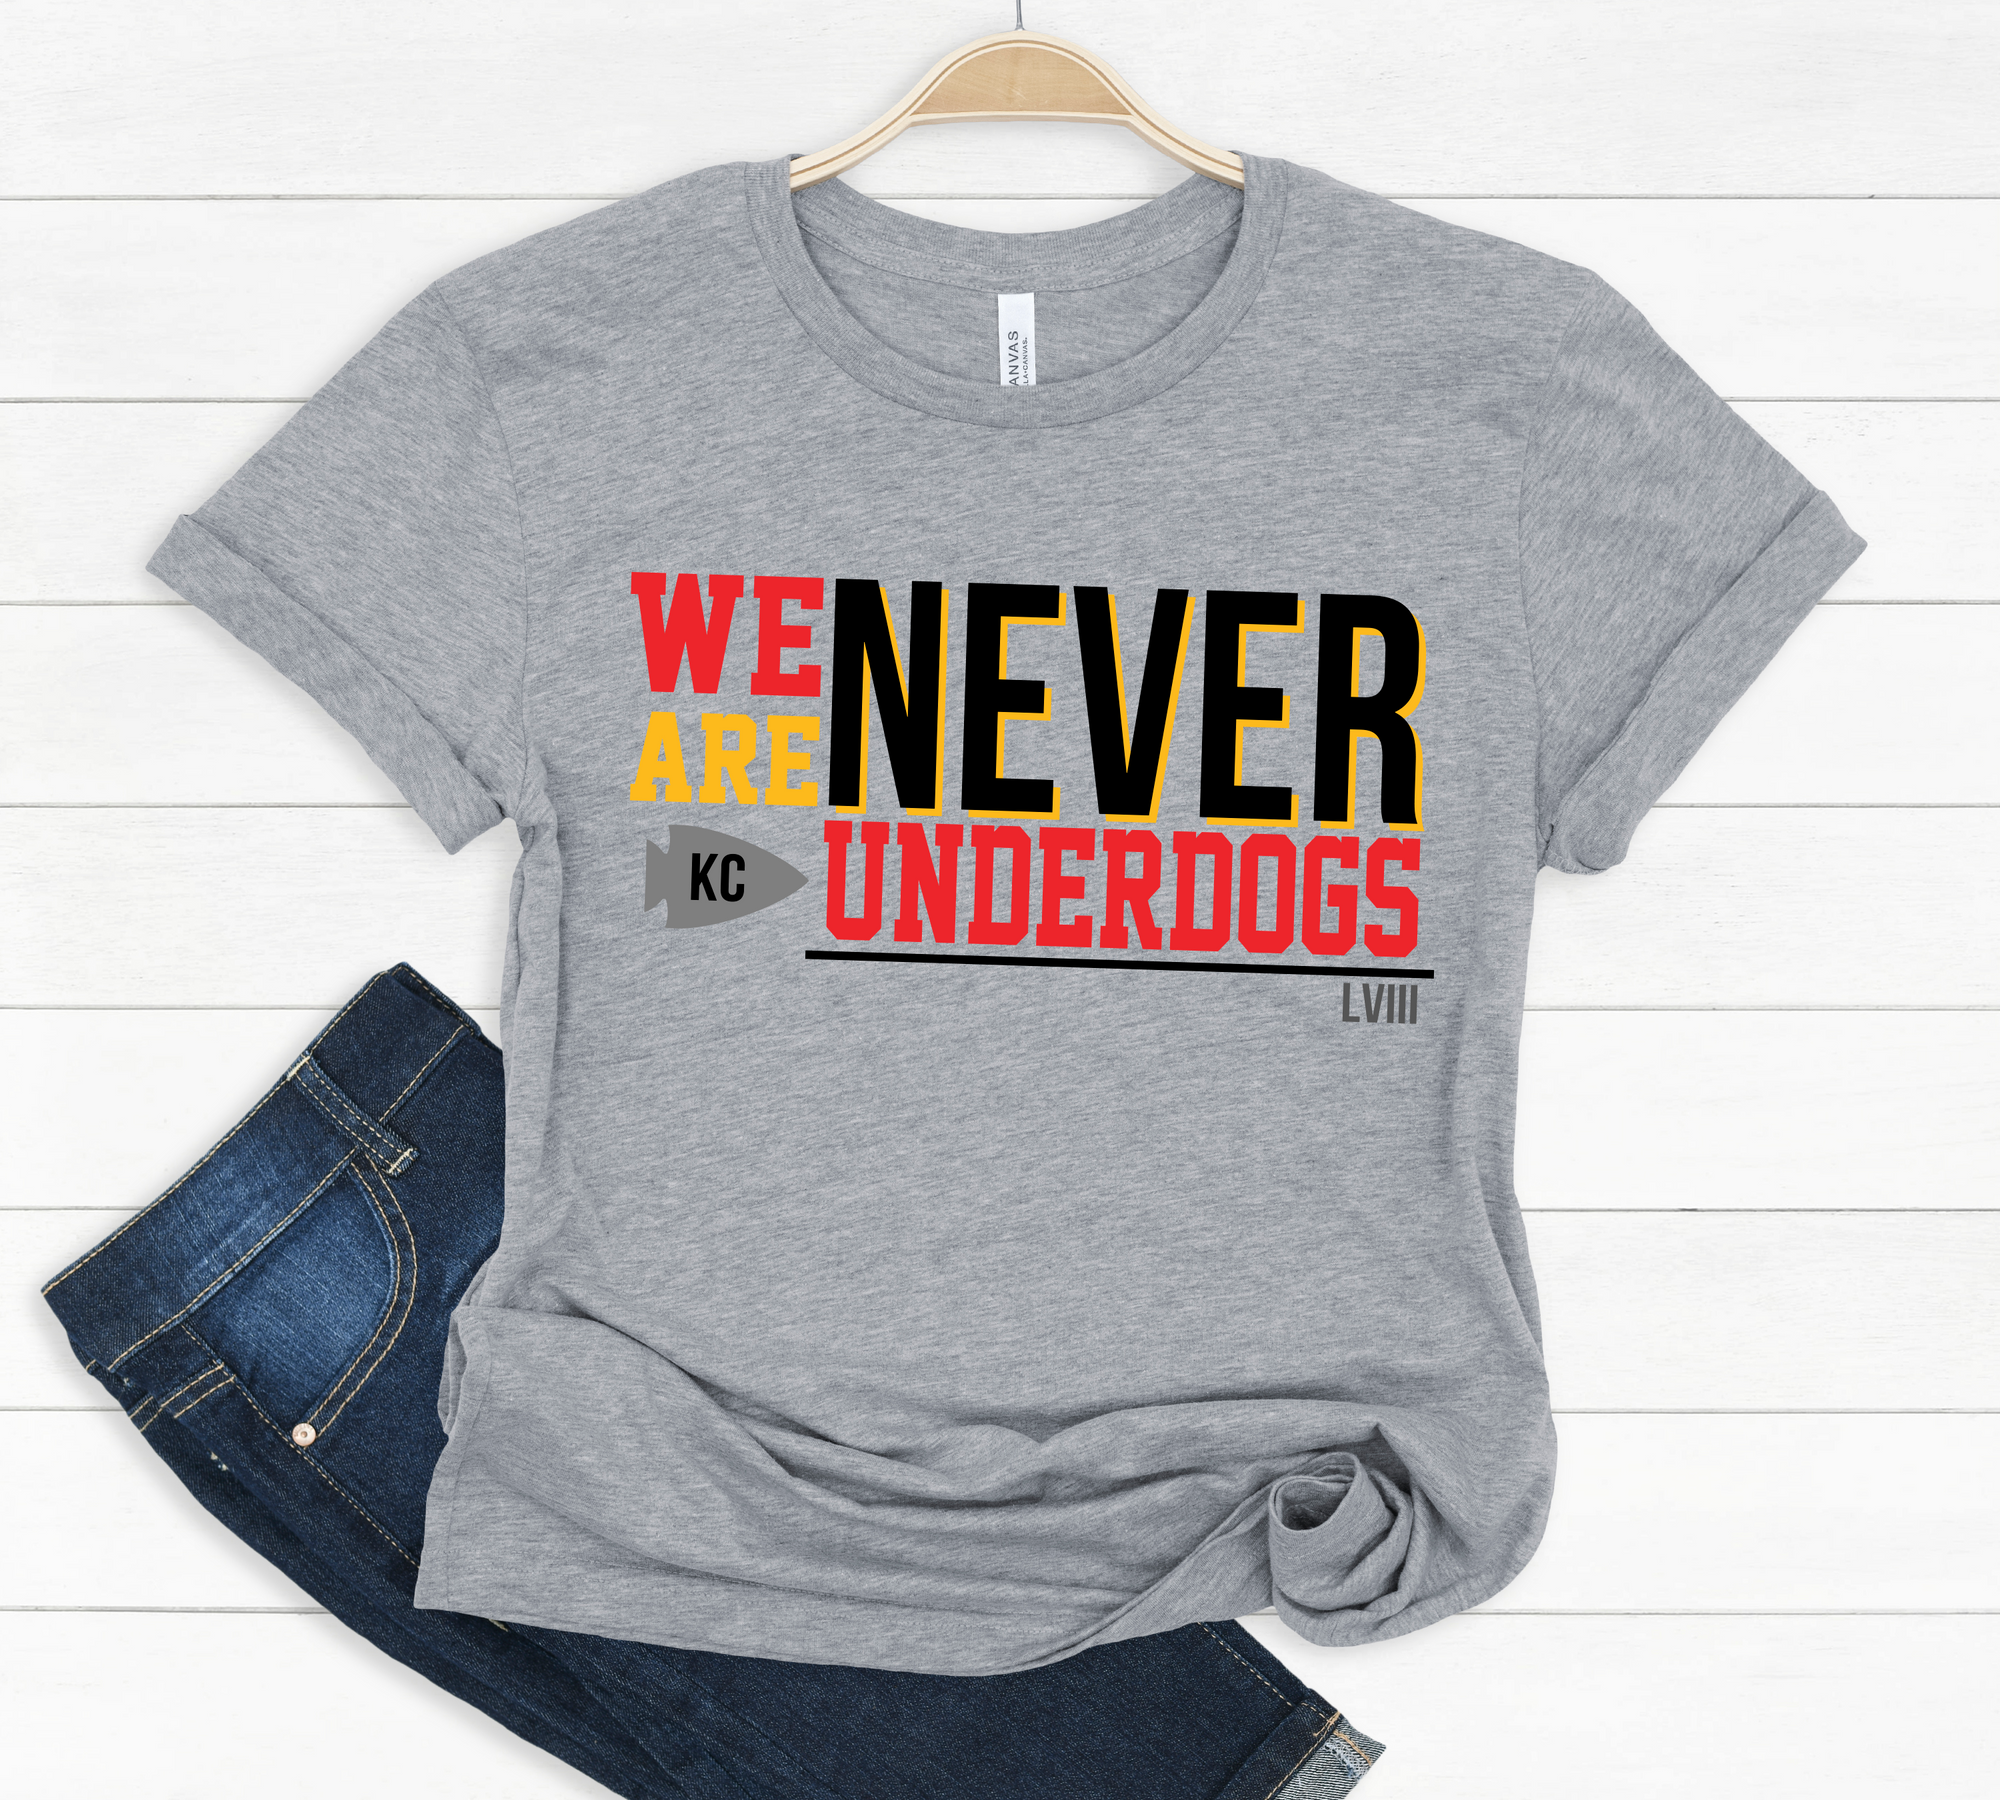 We are Never Underdogs Tee OR Sweatshirt